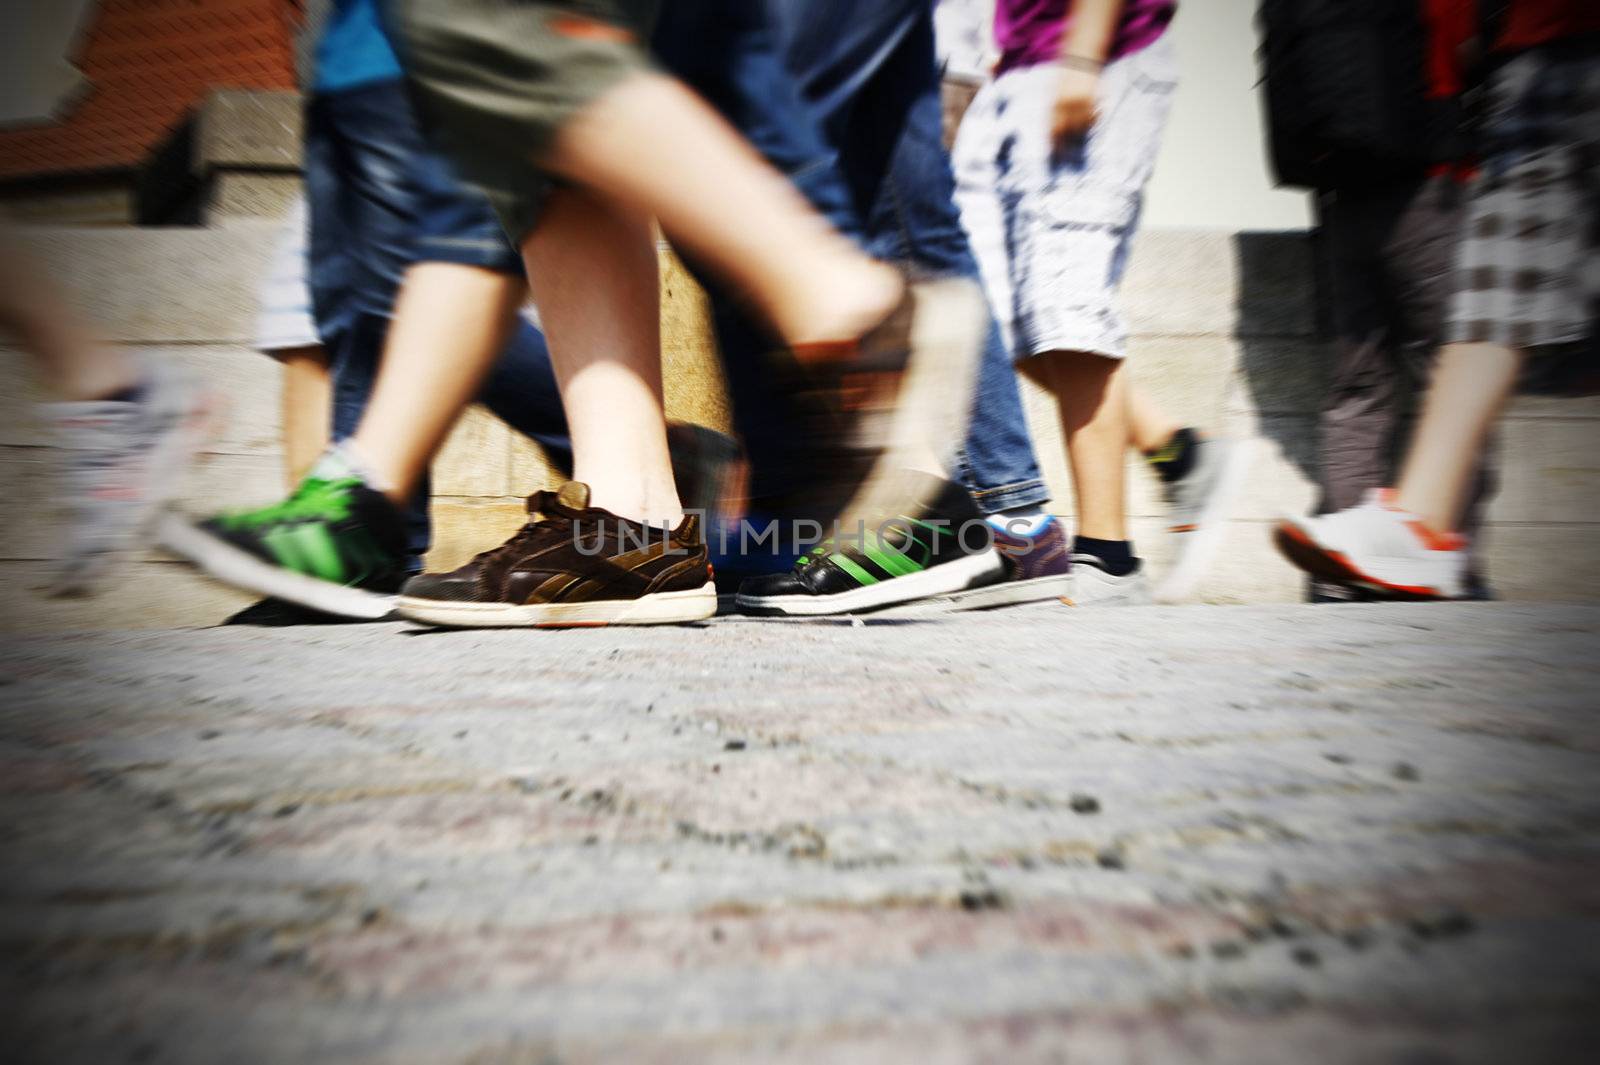  People legs walking on paved urban street